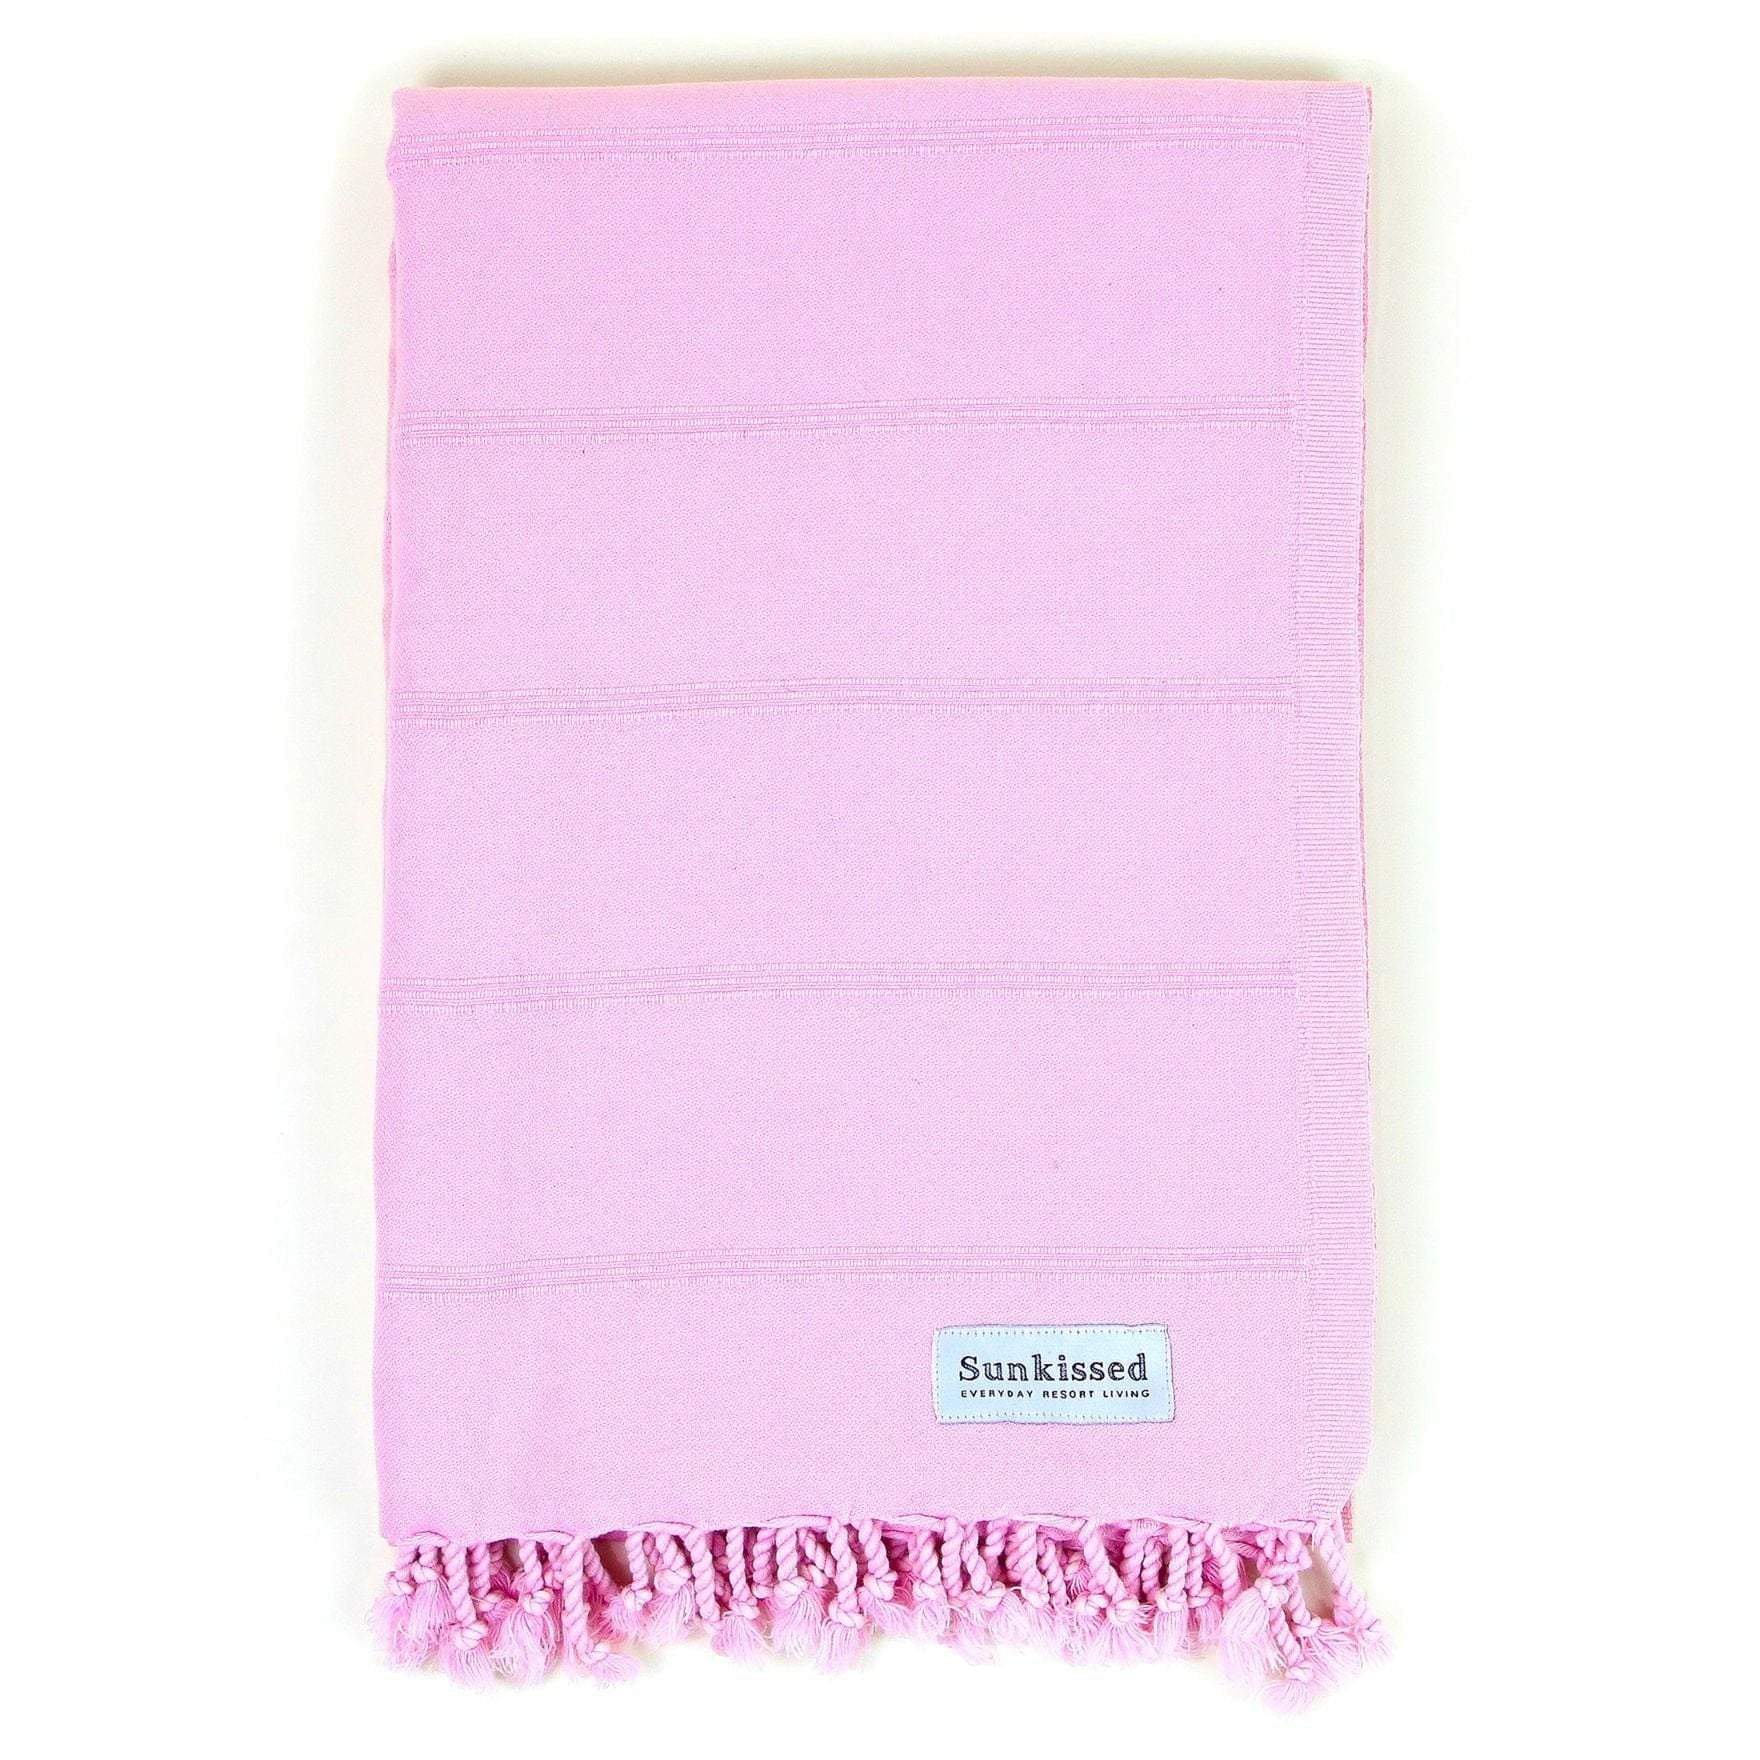 Sunkissed Baby Pink / L • 100cm x 180cm • 40"W x 72"L Fiji • Sand Free Beach Towel by Sunkissed